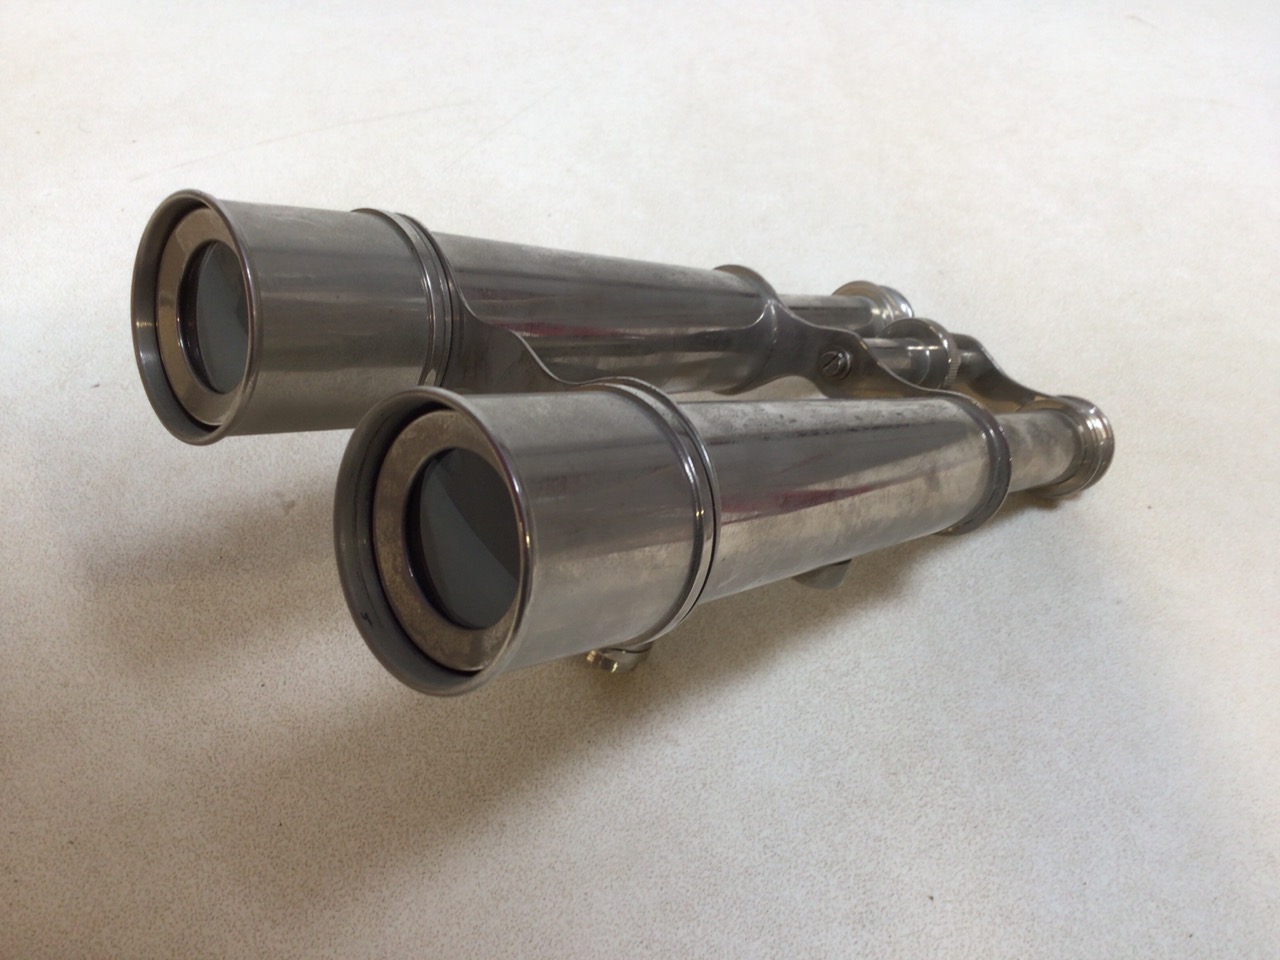 A pair of chrome binoculars with tripod attachment (no tripod) W:11cm x H:21cm - Image 4 of 4